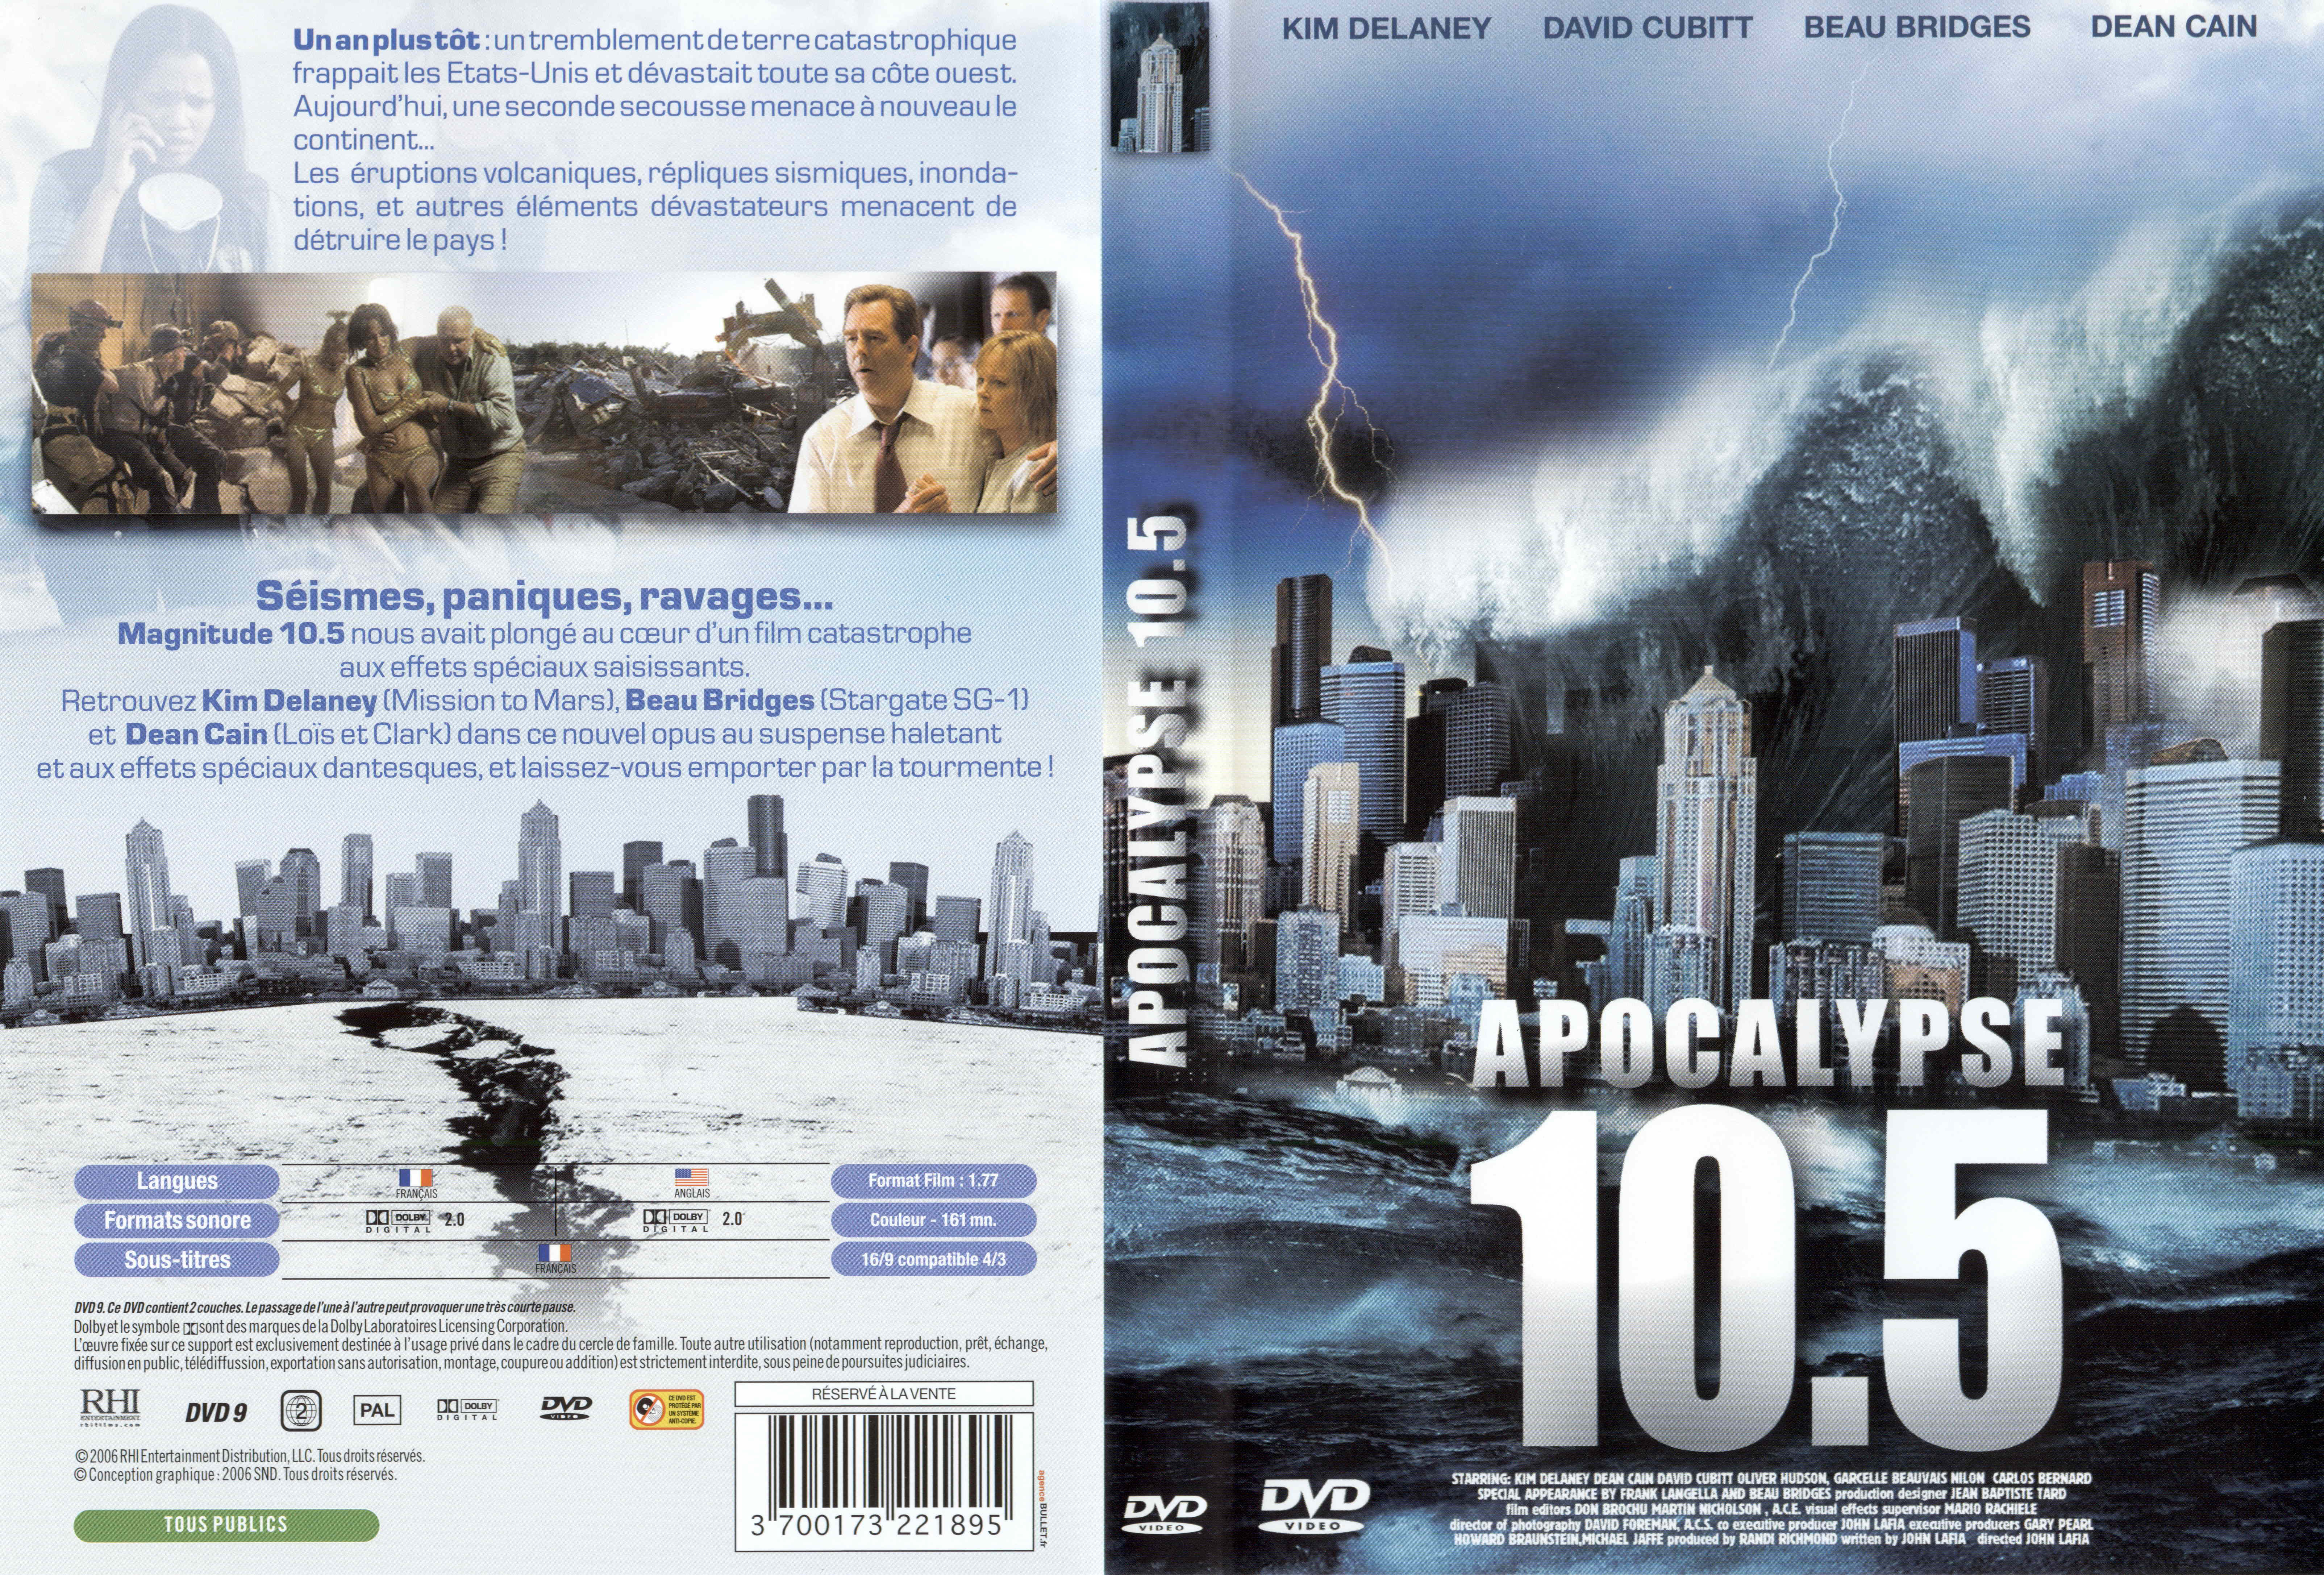 Jaquette DVD Apocalypse 10.5